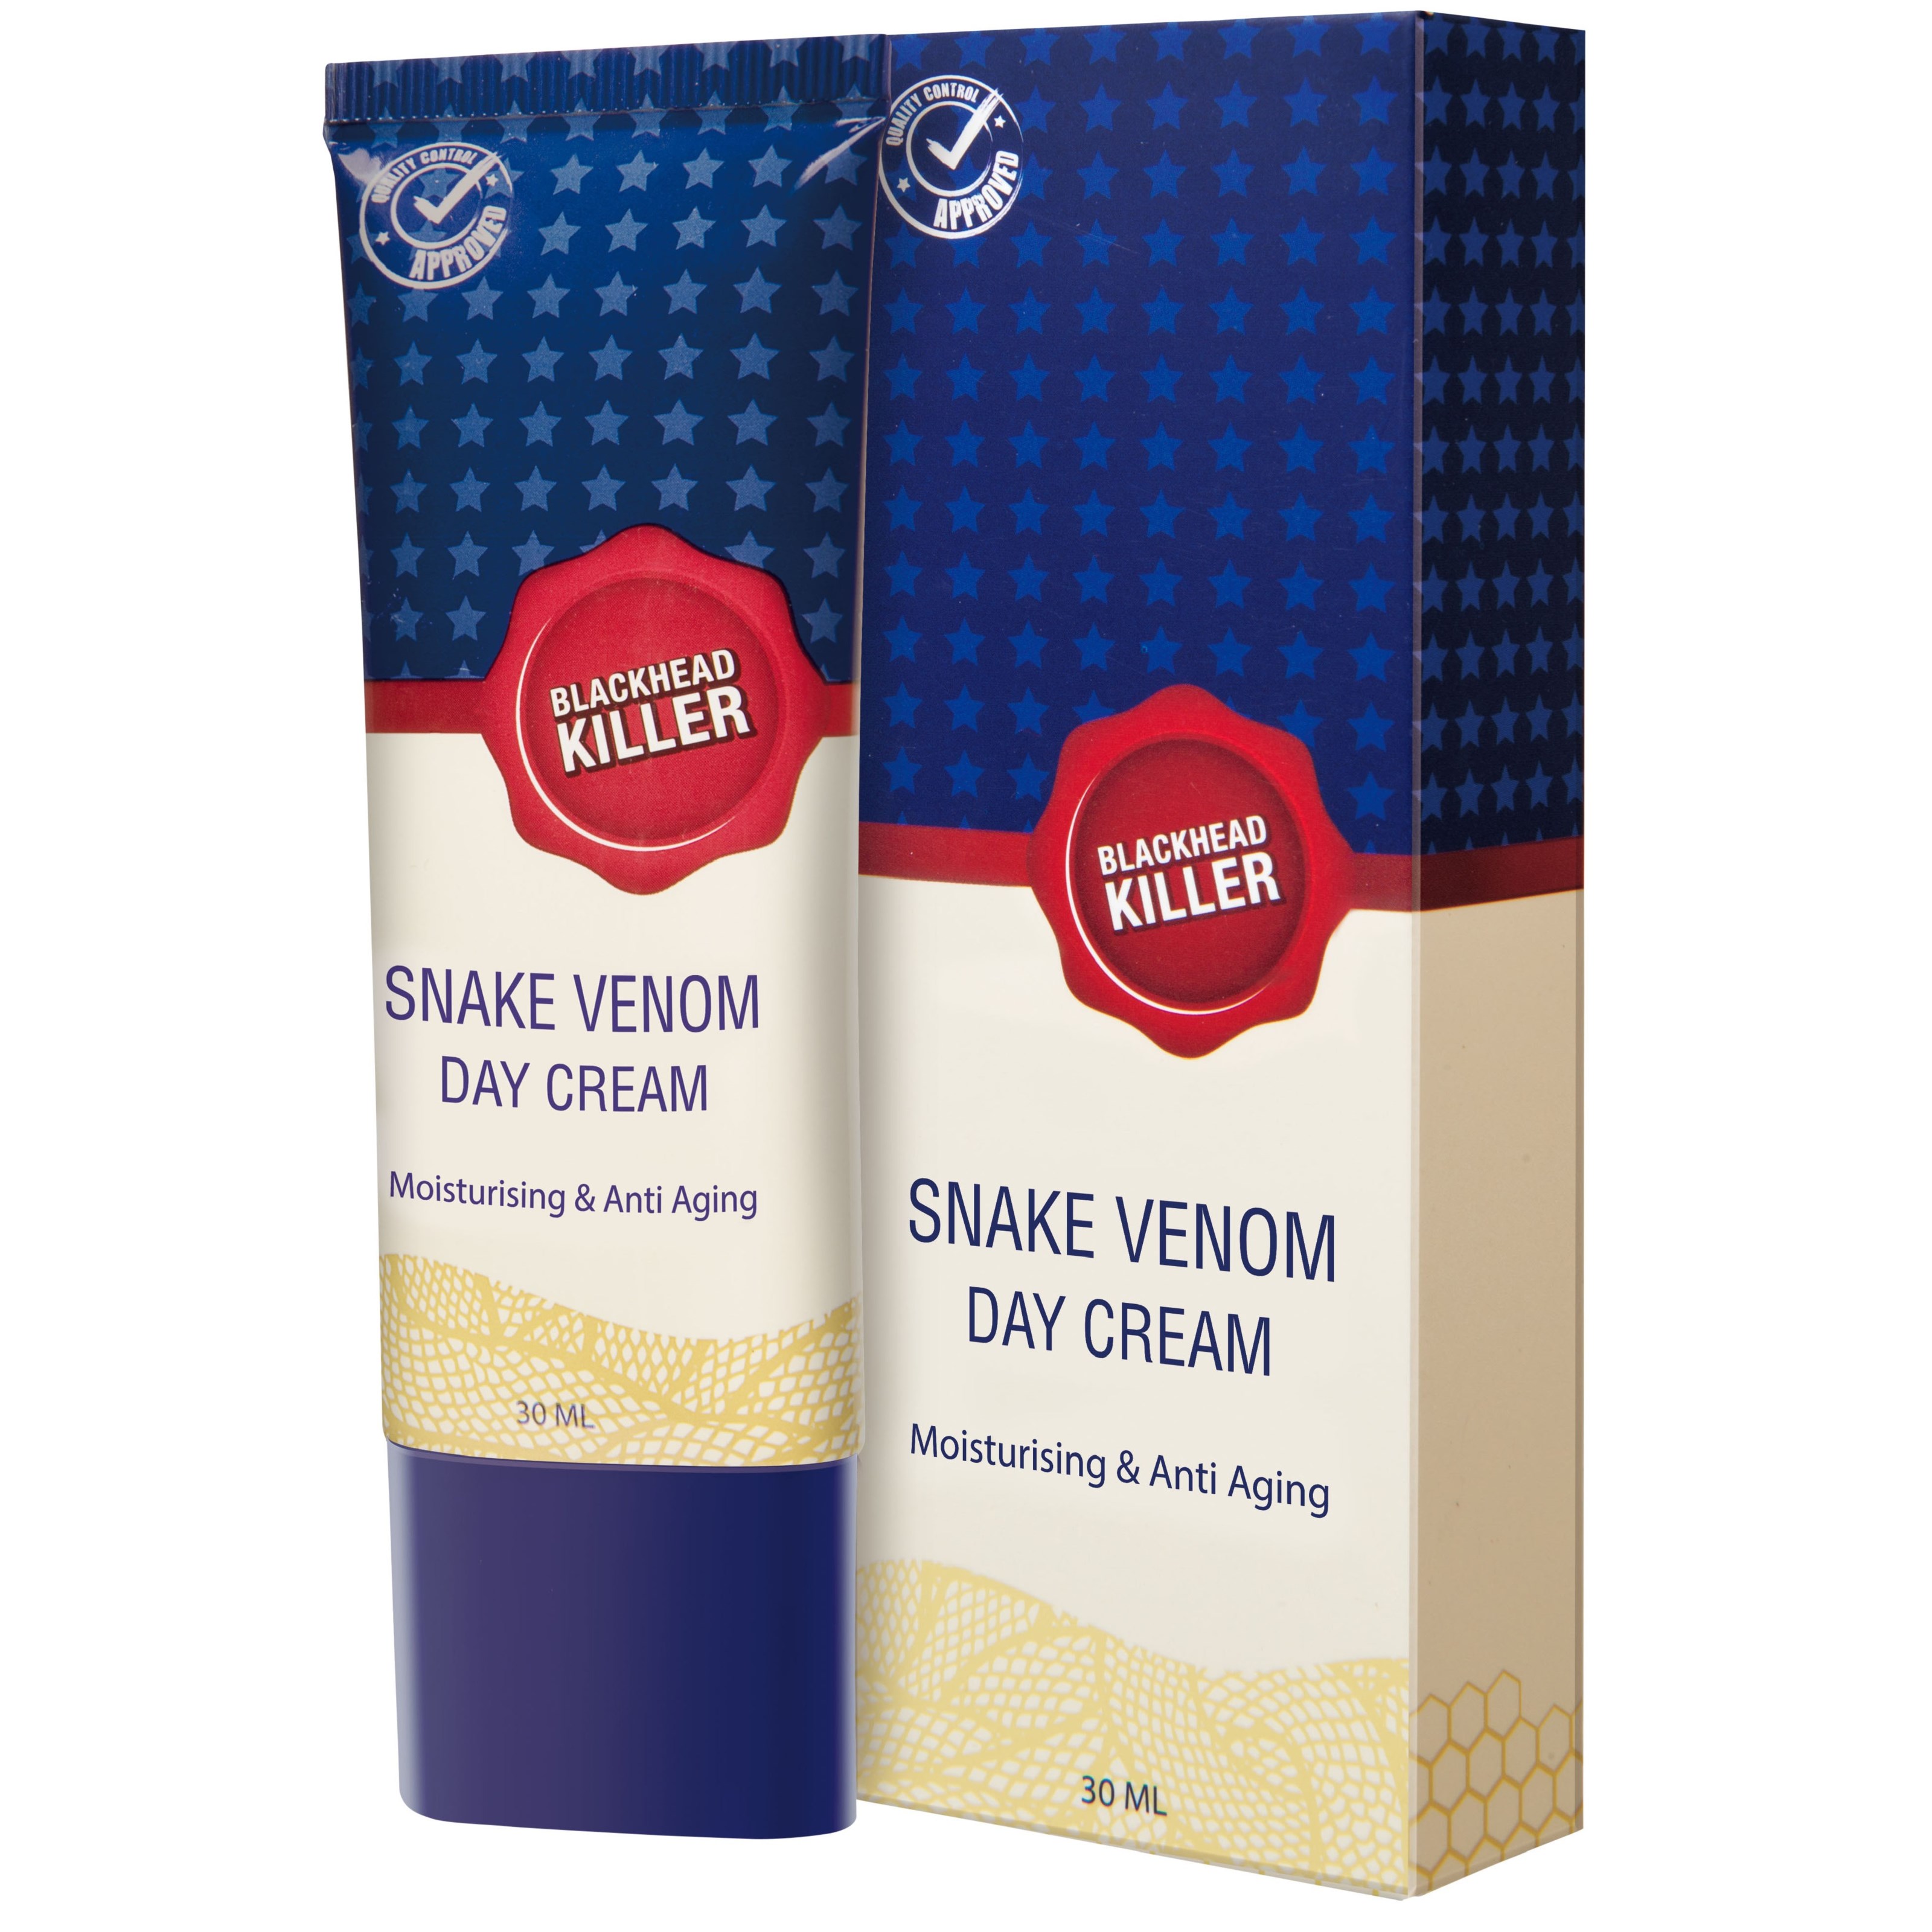 Blackheadkiller Snake Venom Day Cream 30 ml